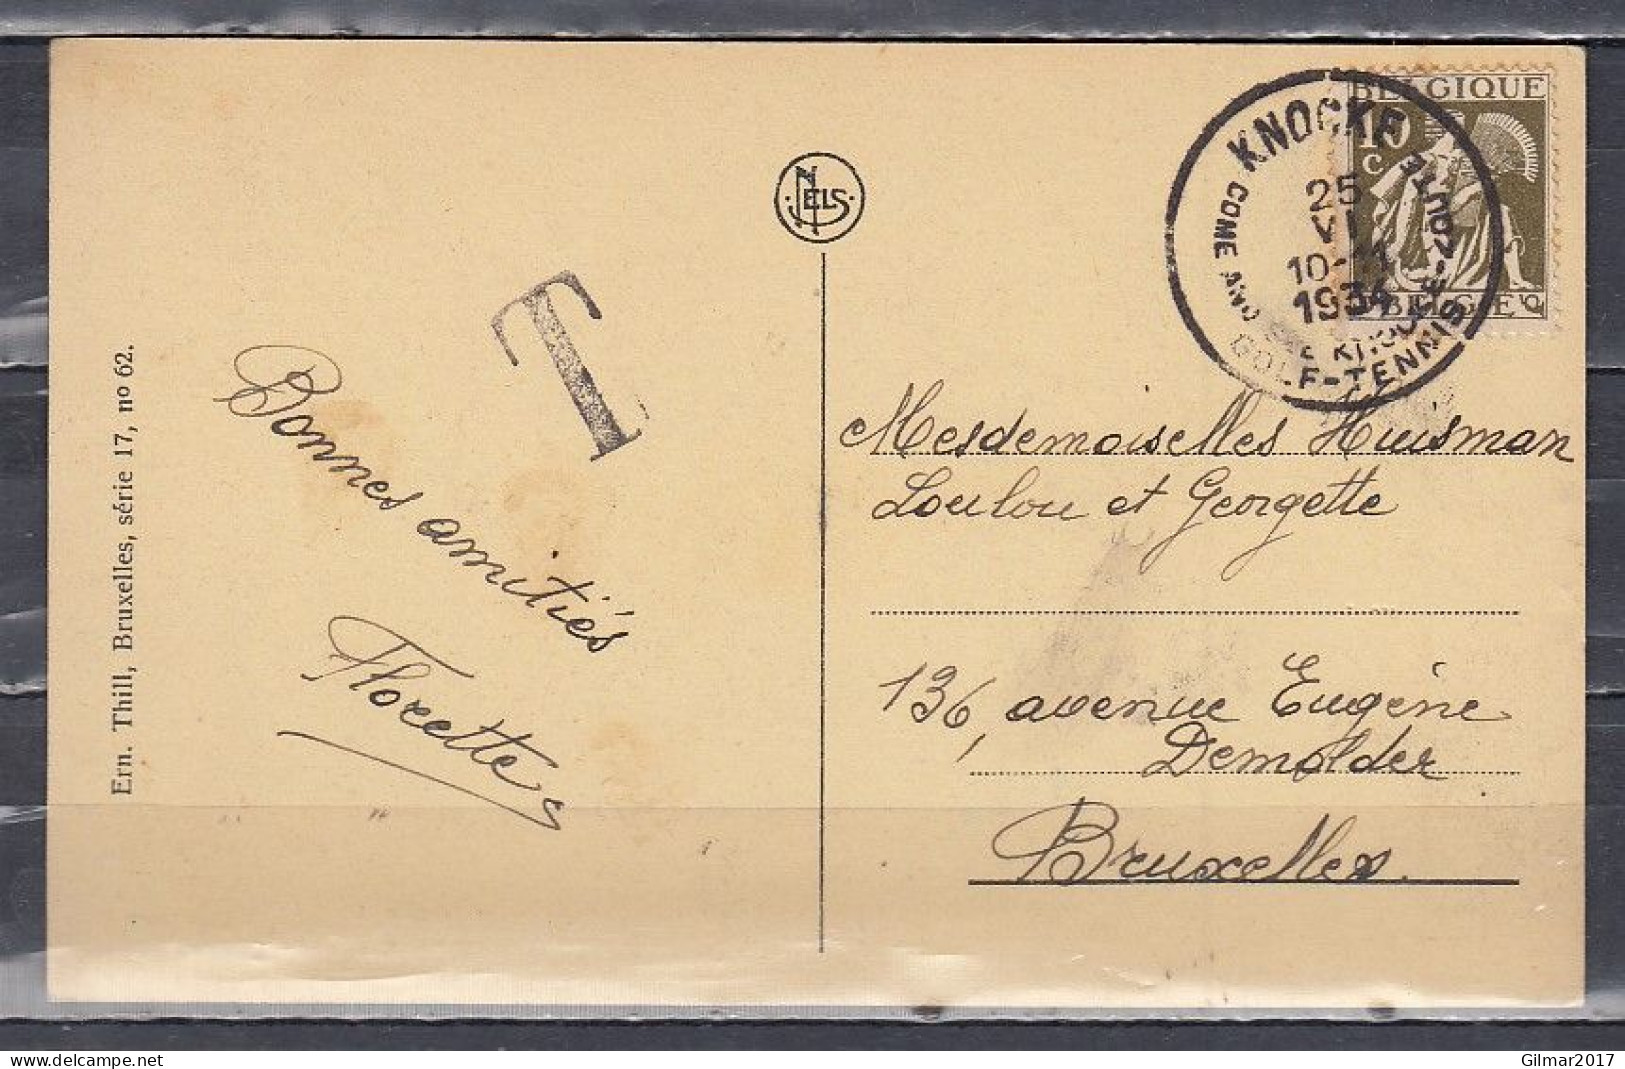 Postkaart Van Knocke Naar Bruxelles Met Taksstempel - 1932 Ceres Und Mercure